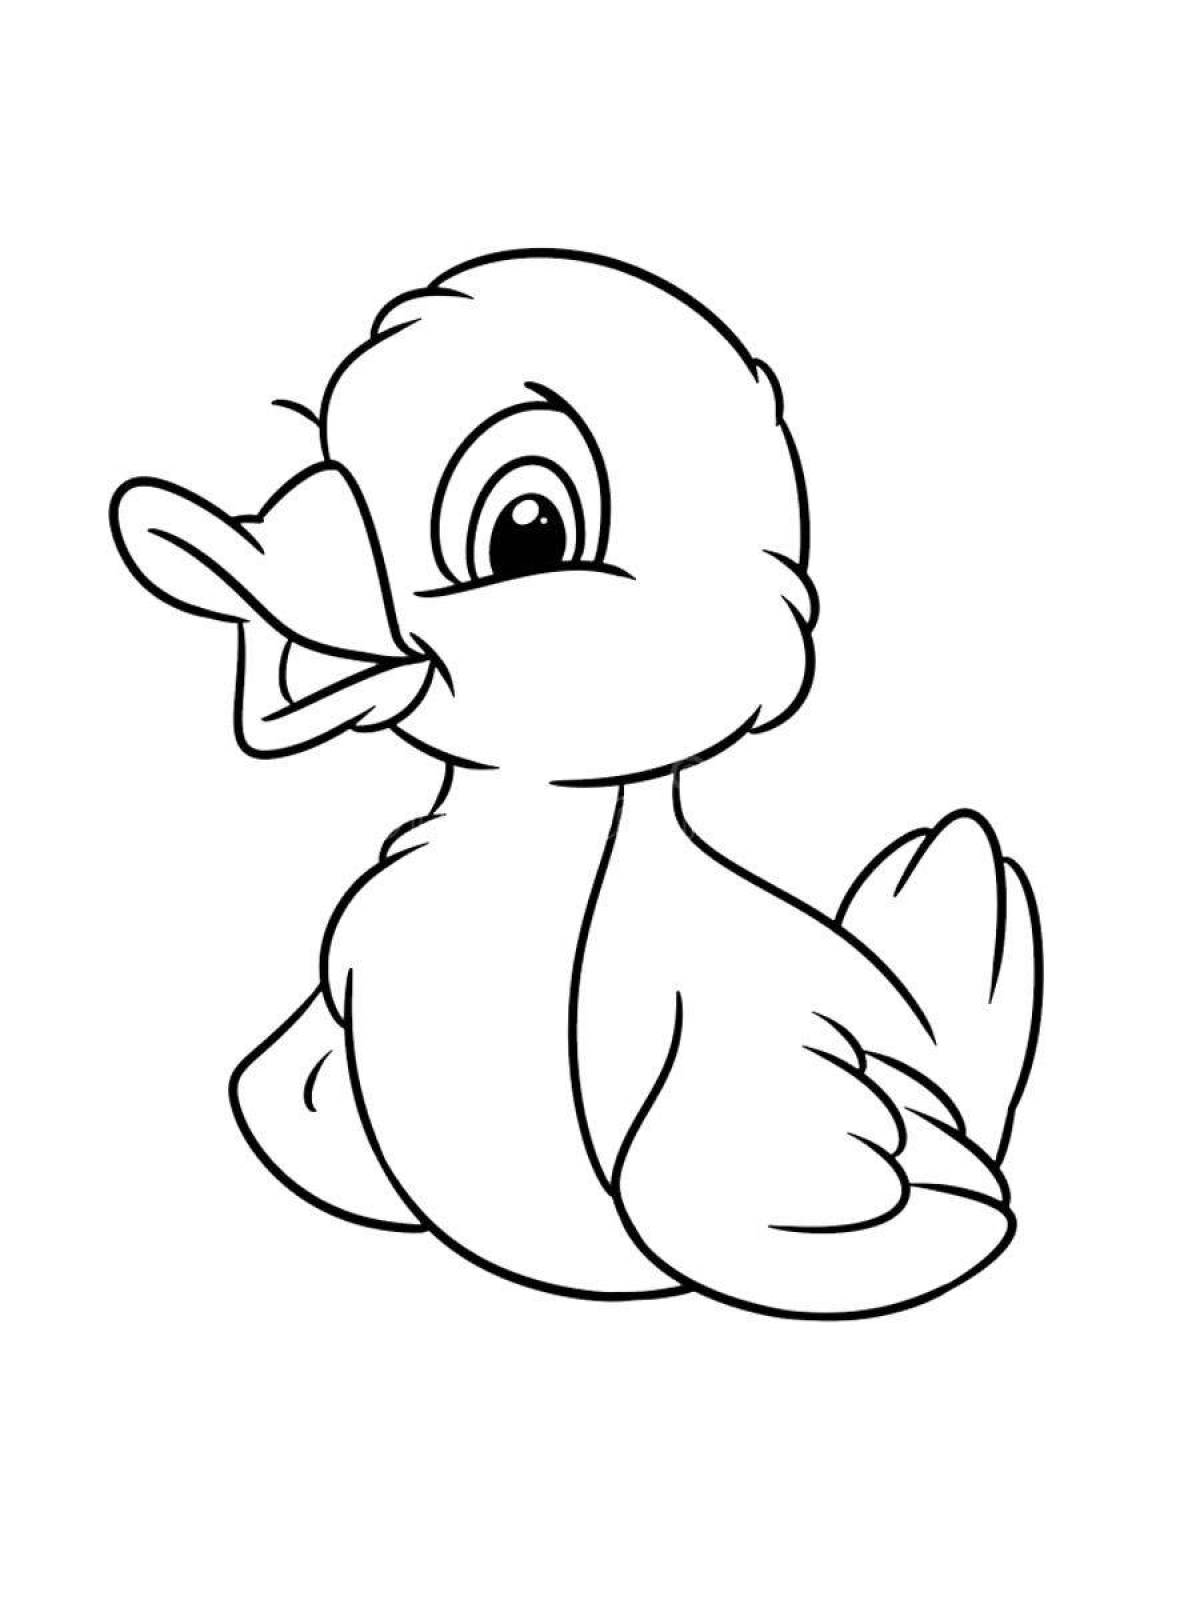 Coloring book energetic duck